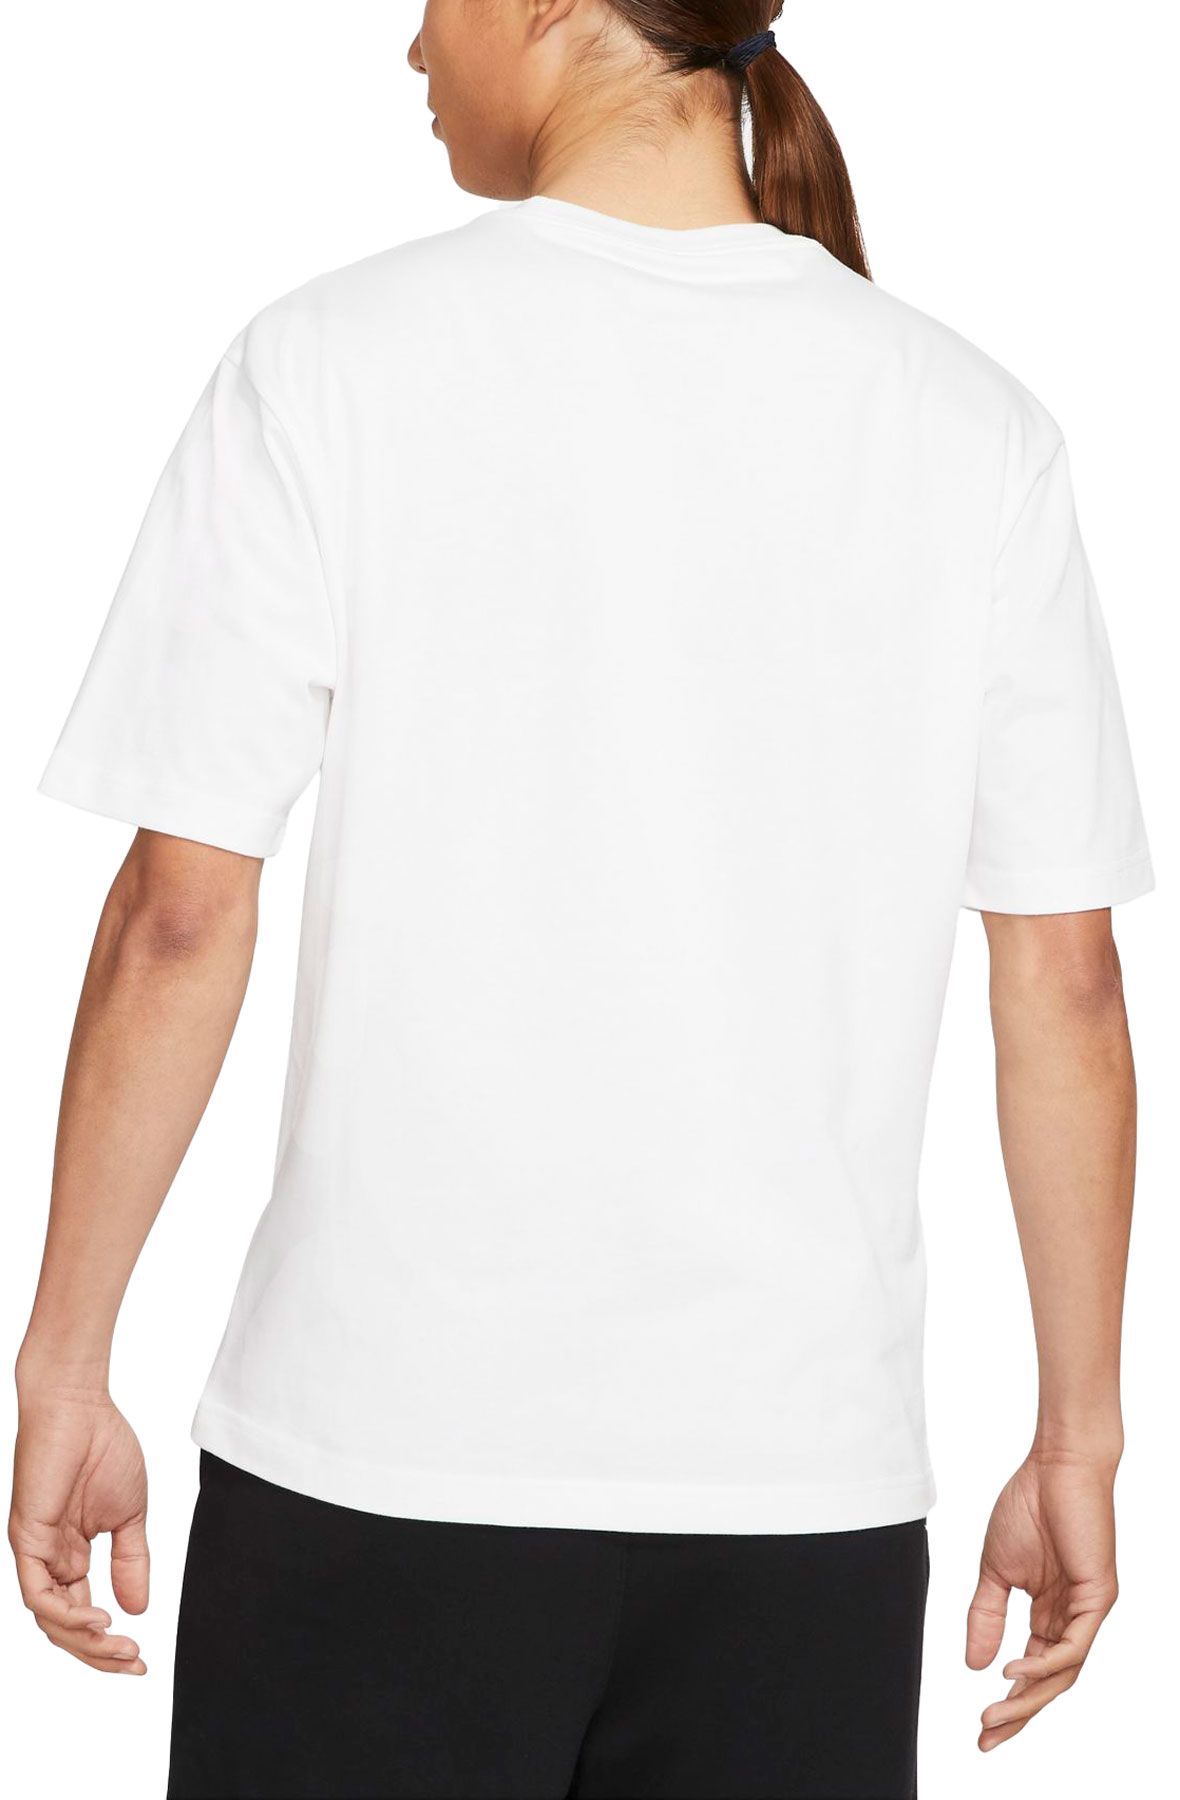 JORDAN Jumpman 85 Short-Sleeve T-Shirt DA9898 100 - Shiekh